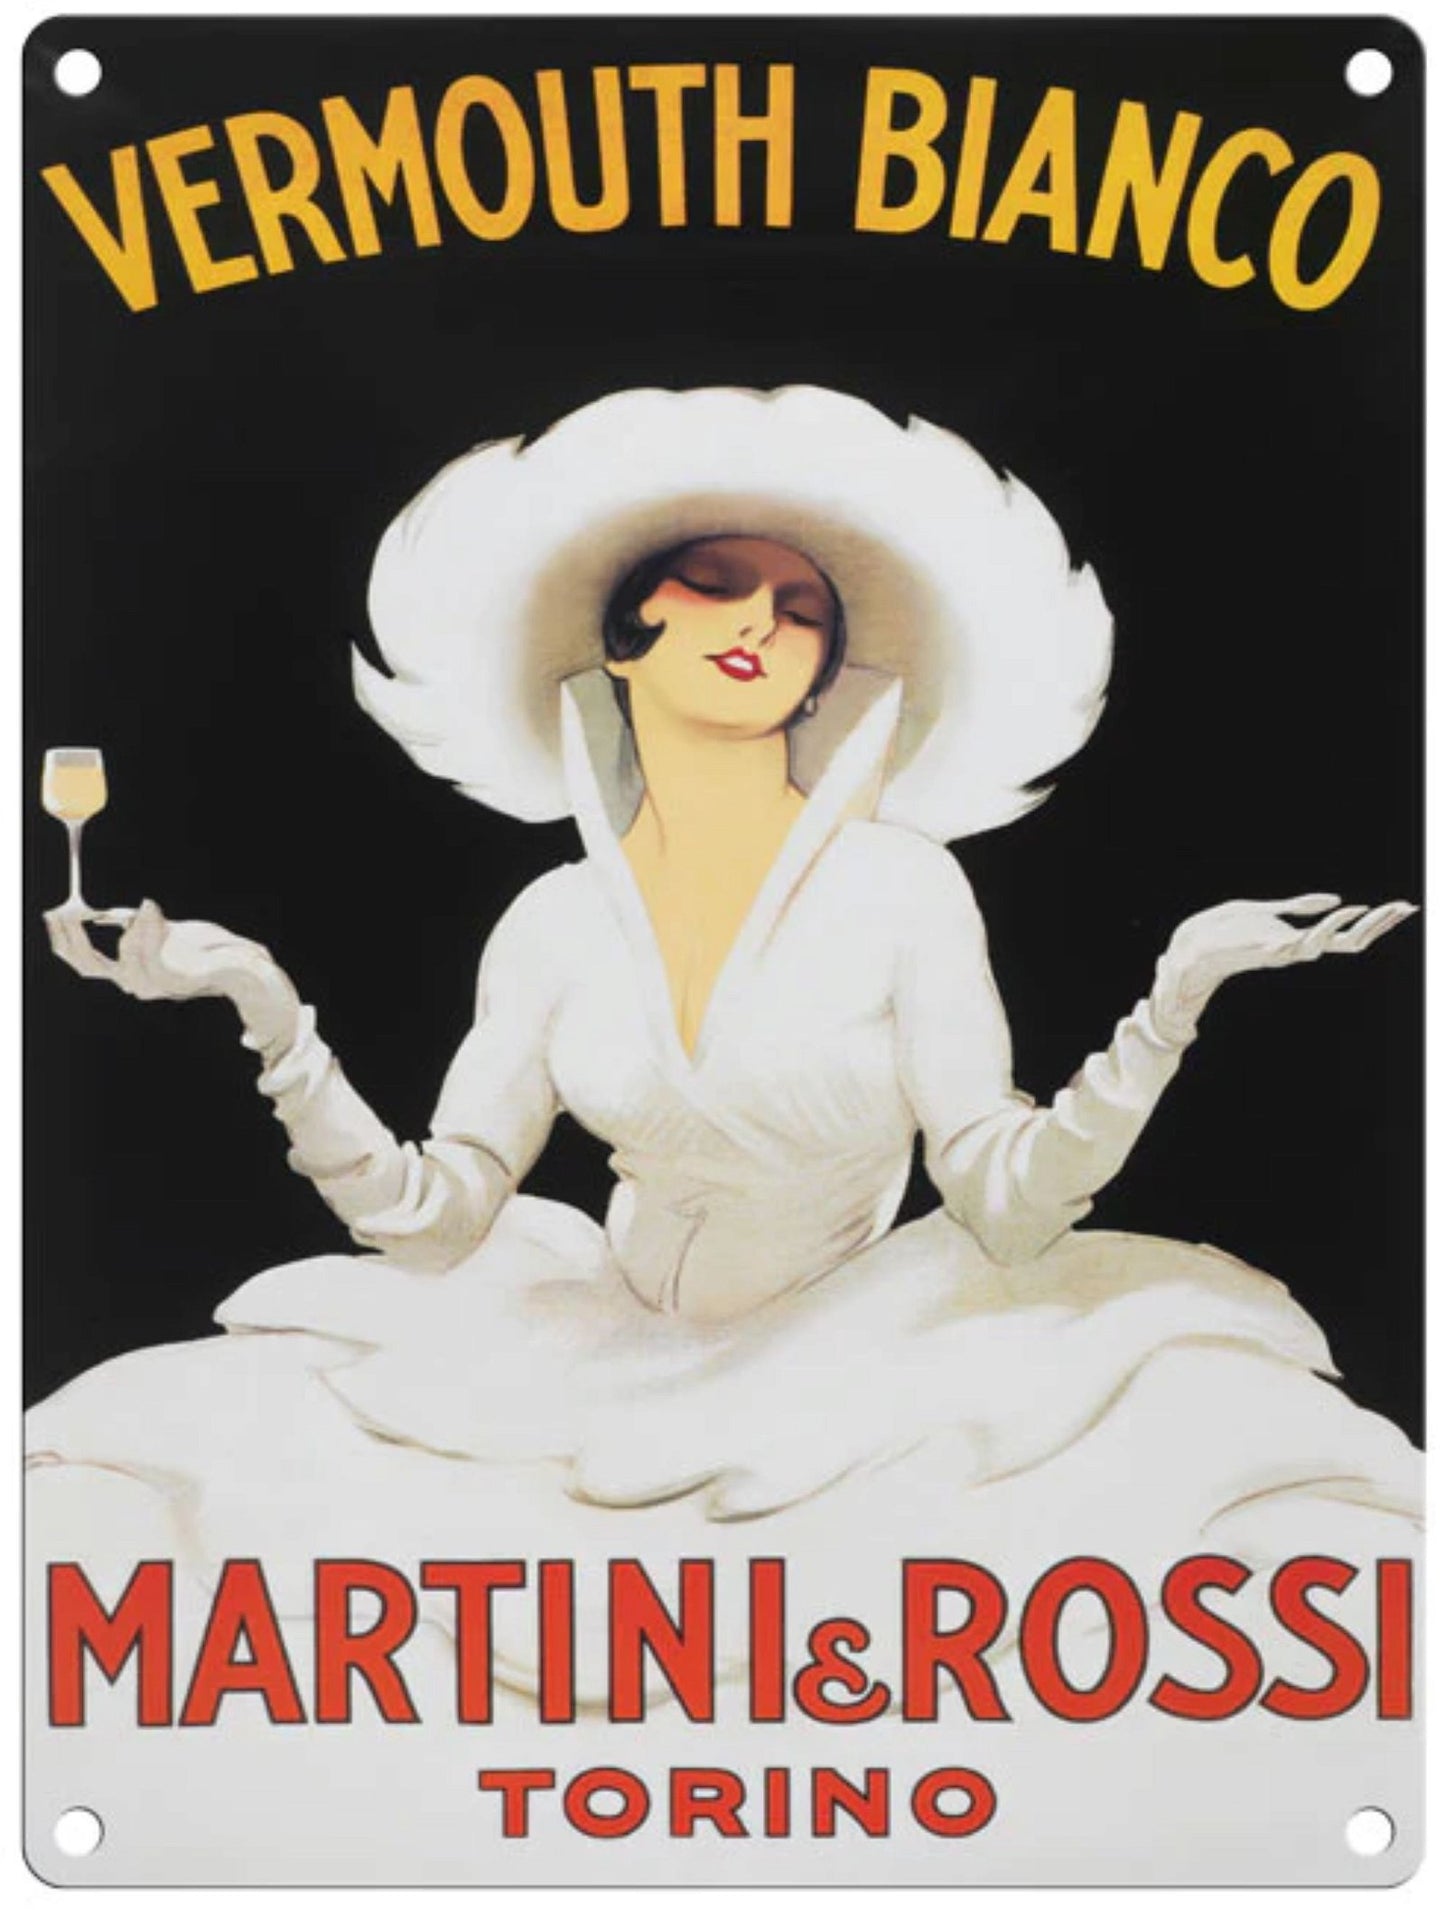 Small Metal Sign 45 x 37.5cm Vintage Retro Vermouth Bianco Martini